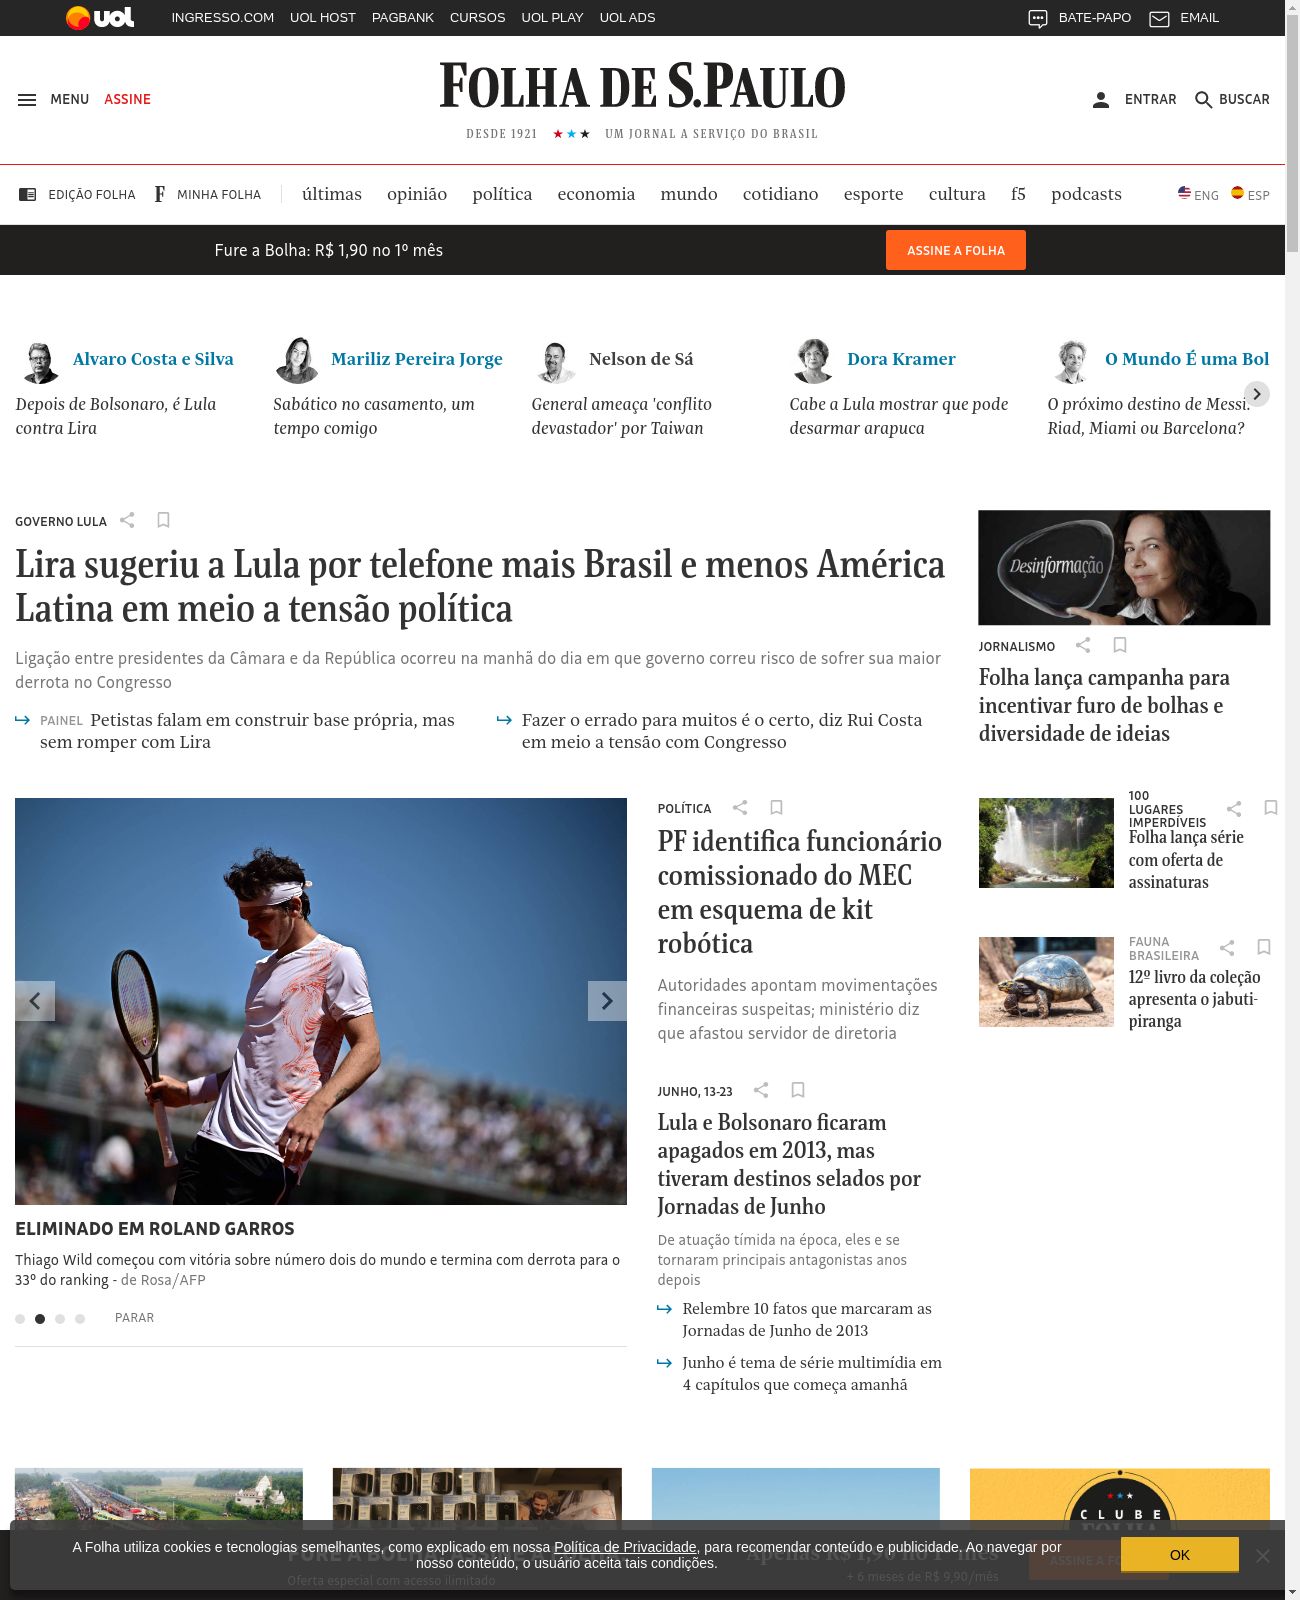 Folha de S.Paulo at 2023-06-03 10:28:56-03:00 local time